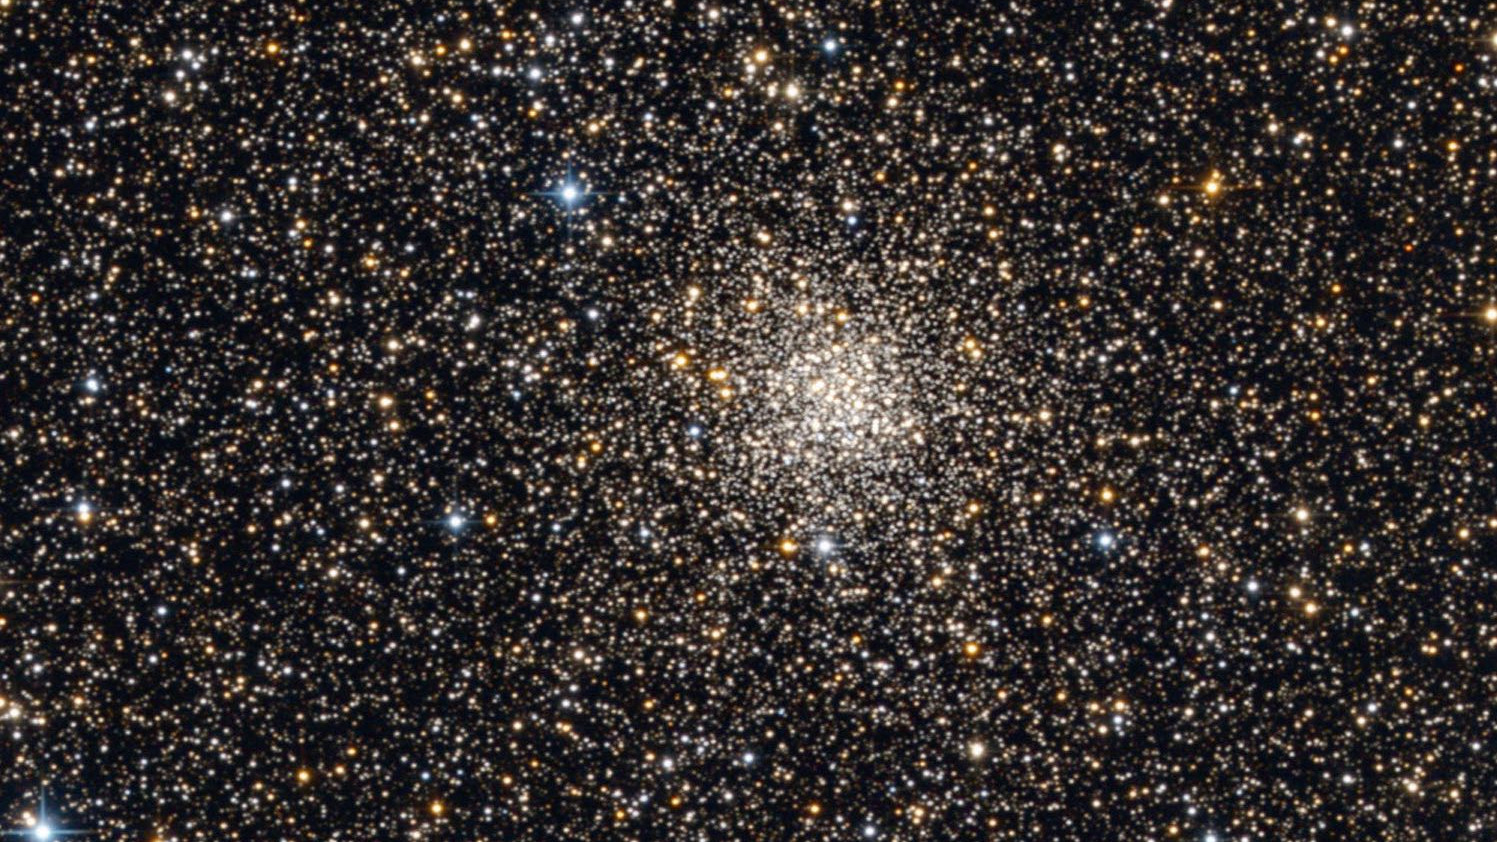 Messier 71, the loose globular cluster